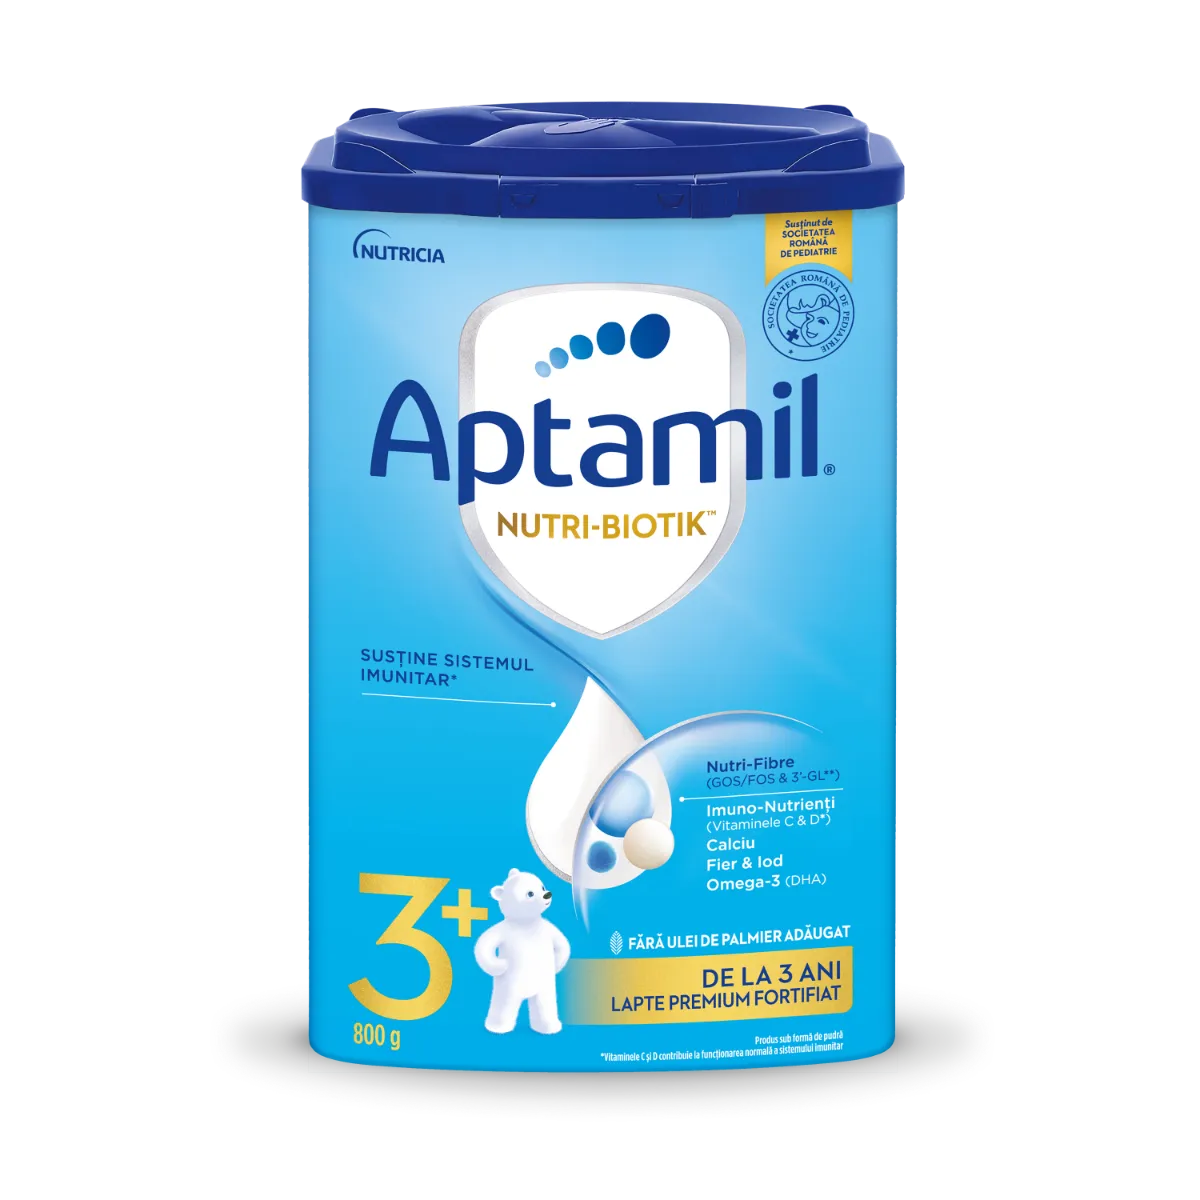 Lapte premium fortifiat de la 3 ani NUTRI-BIOTIK 3+, 800g, Aptamil